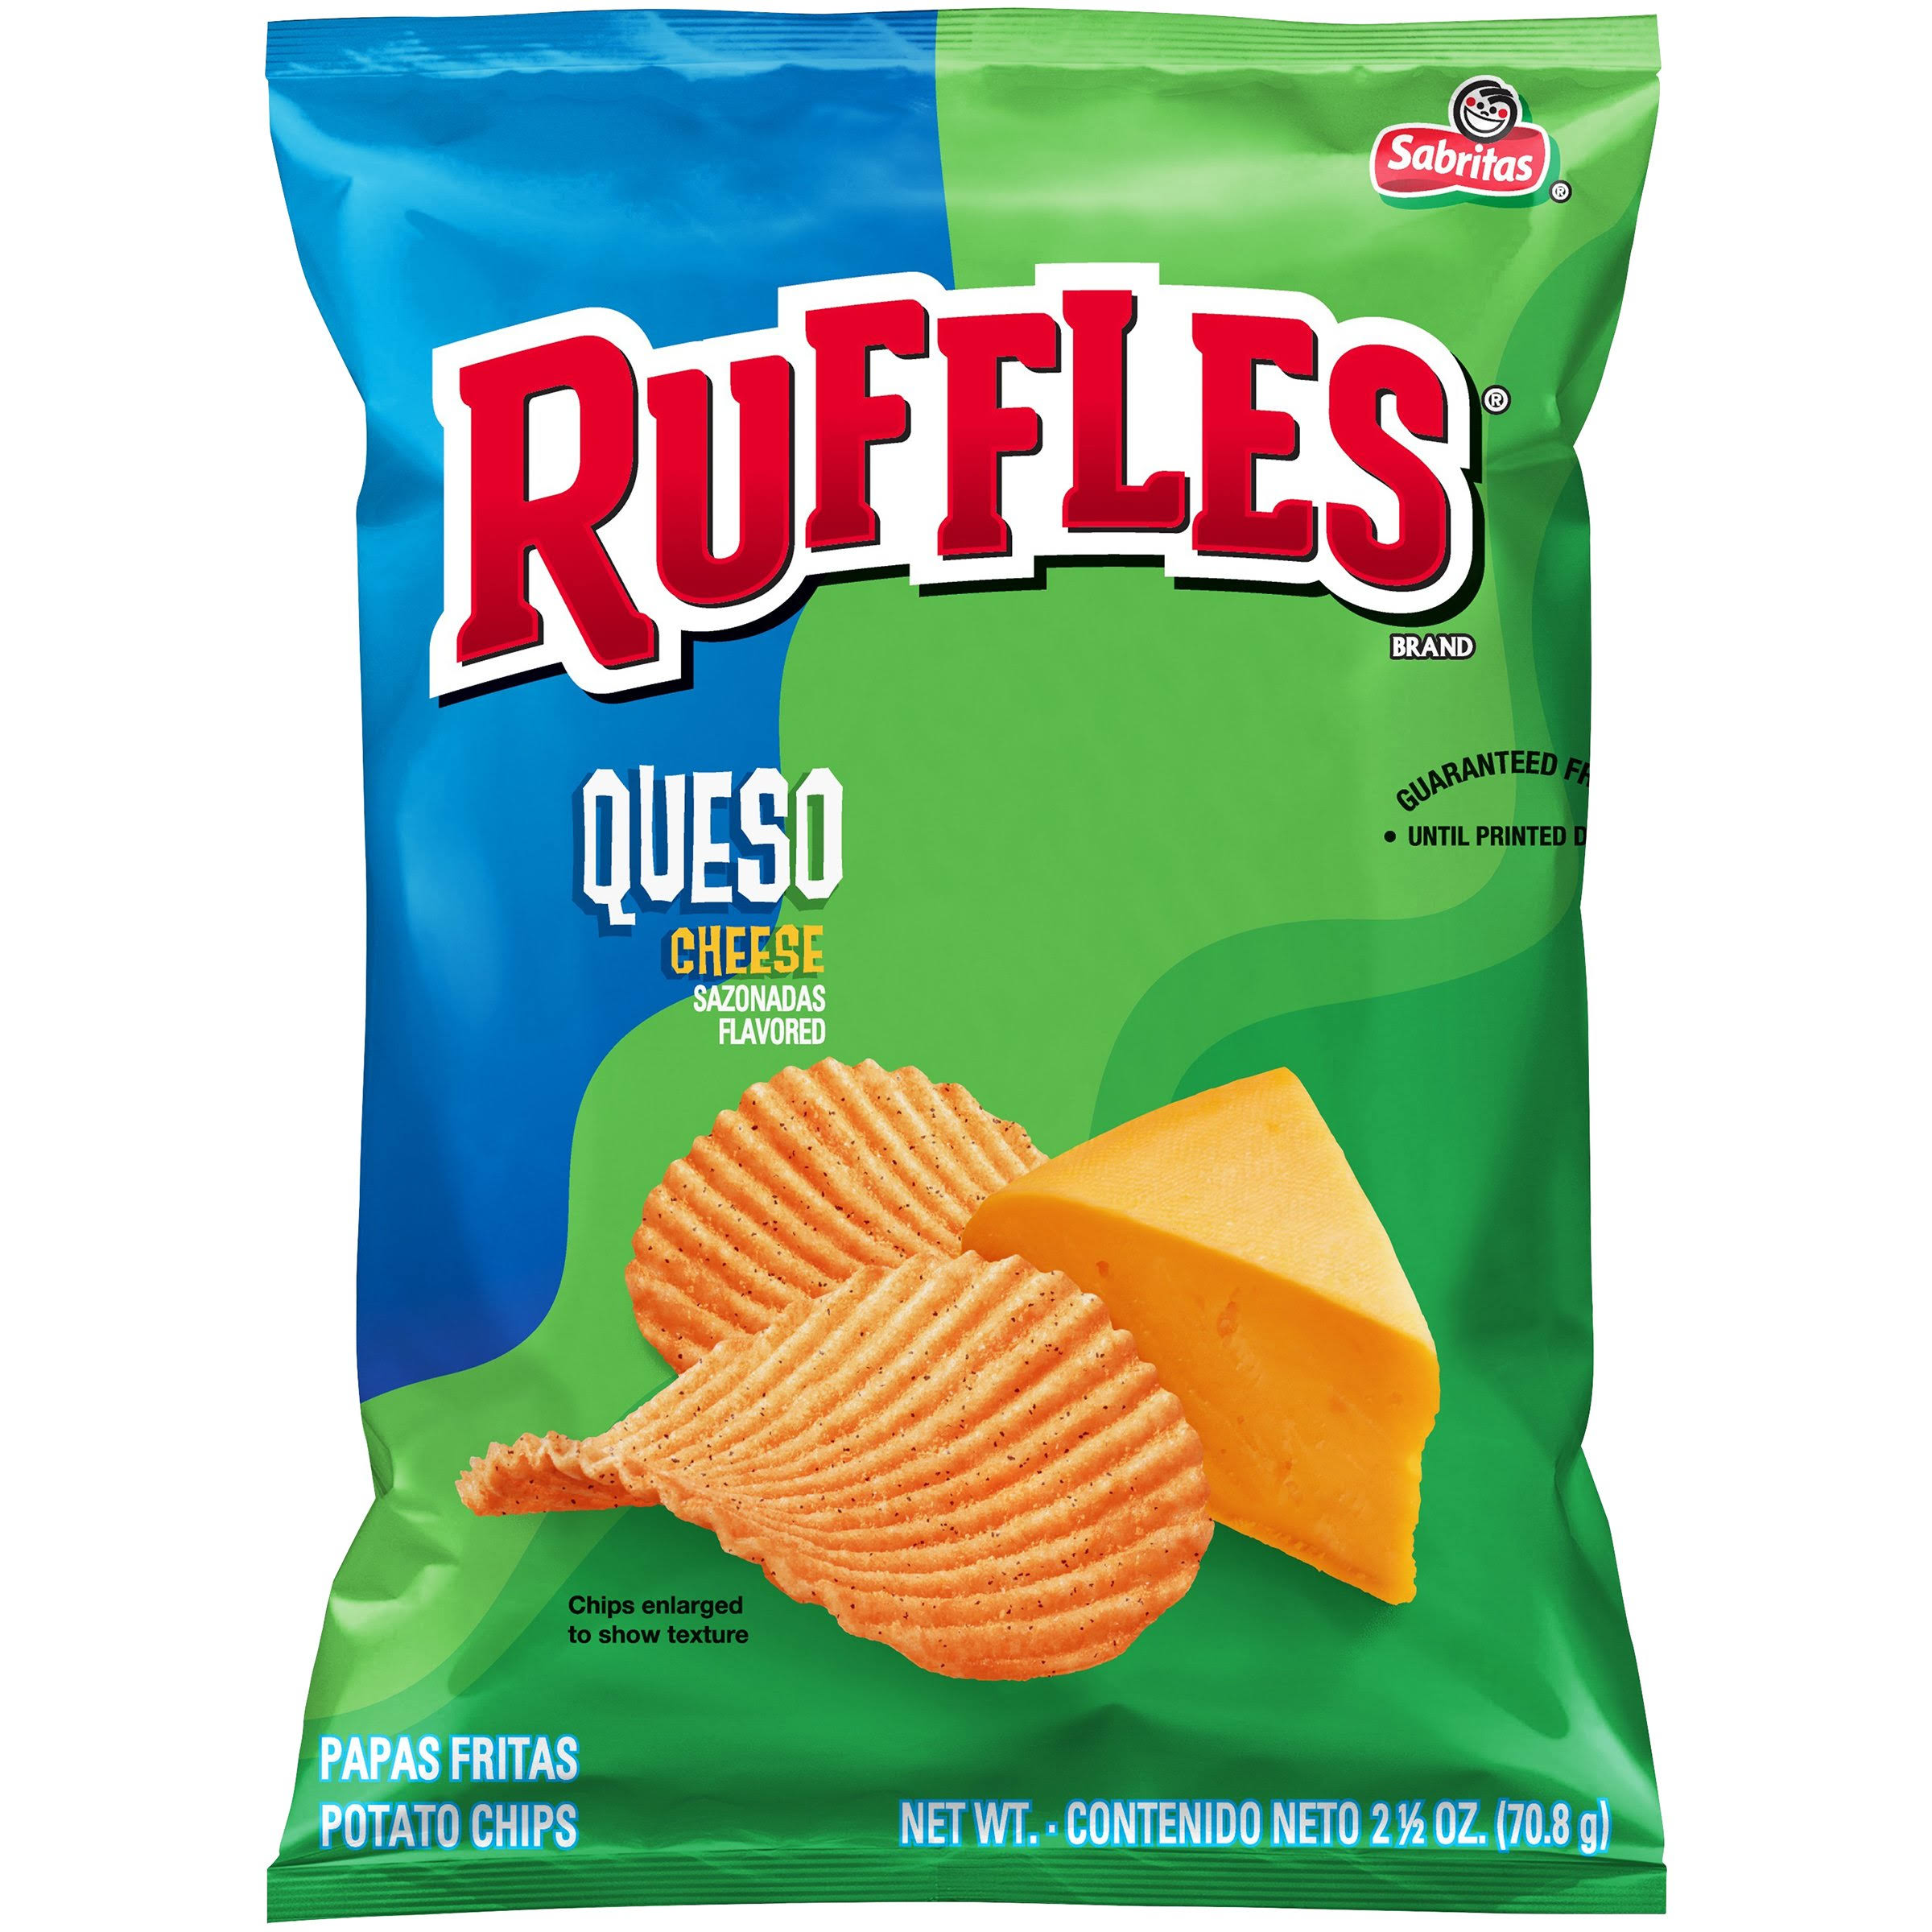 Ruffles Queso Cheese Potato Chips - 2.5 oz